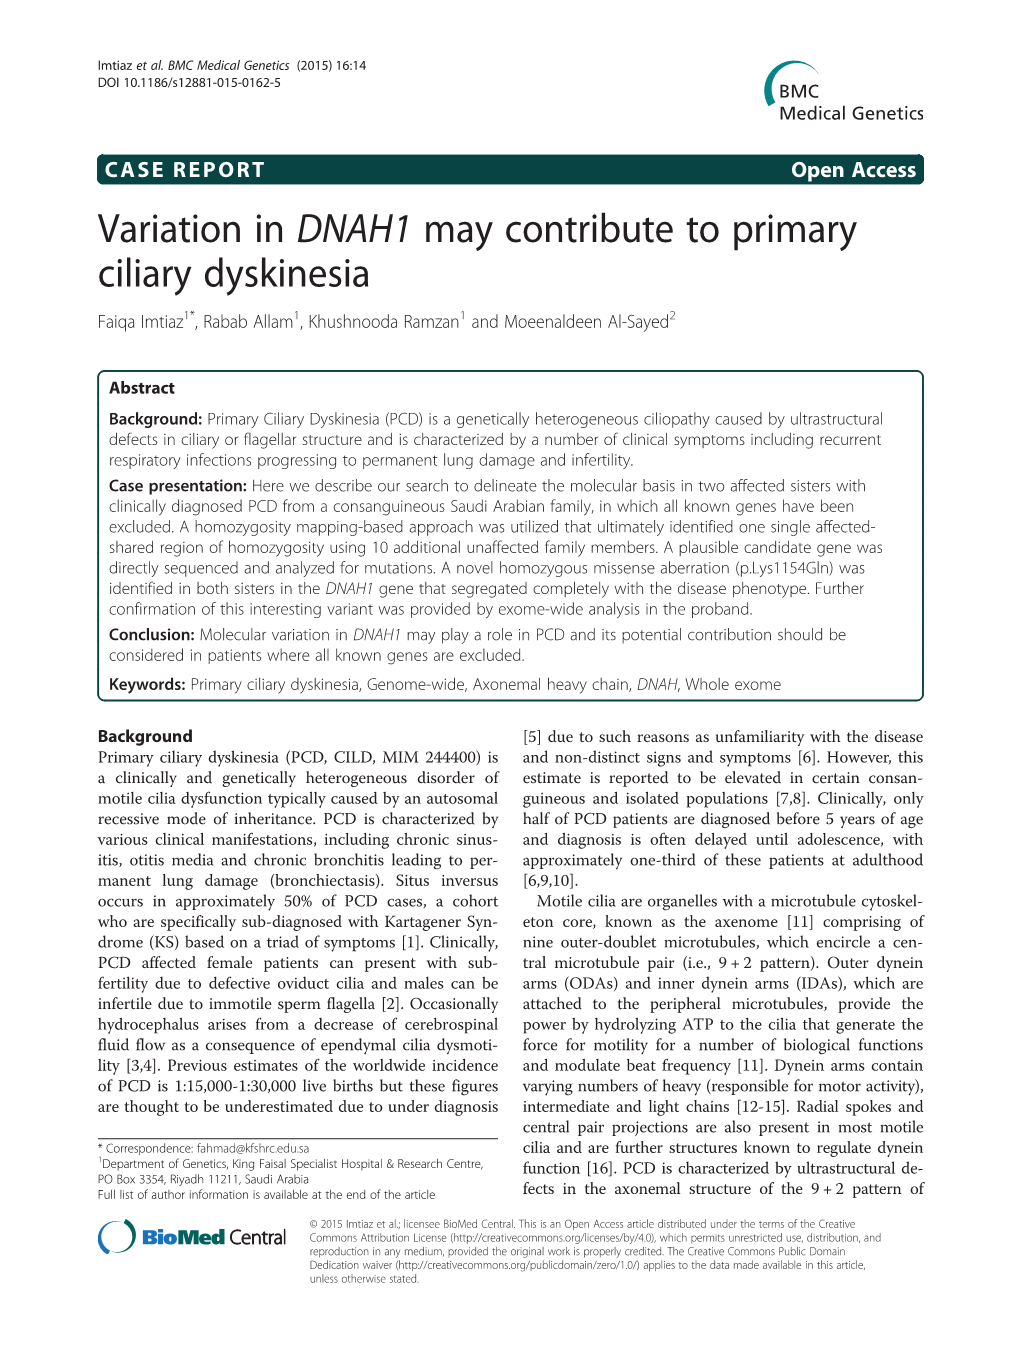 Variation in DNAH1 May Contribute to Primary Ciliary Dyskinesia Faiqa Imtiaz1*, Rabab Allam1, Khushnooda Ramzan1 and Moeenaldeen Al-Sayed2